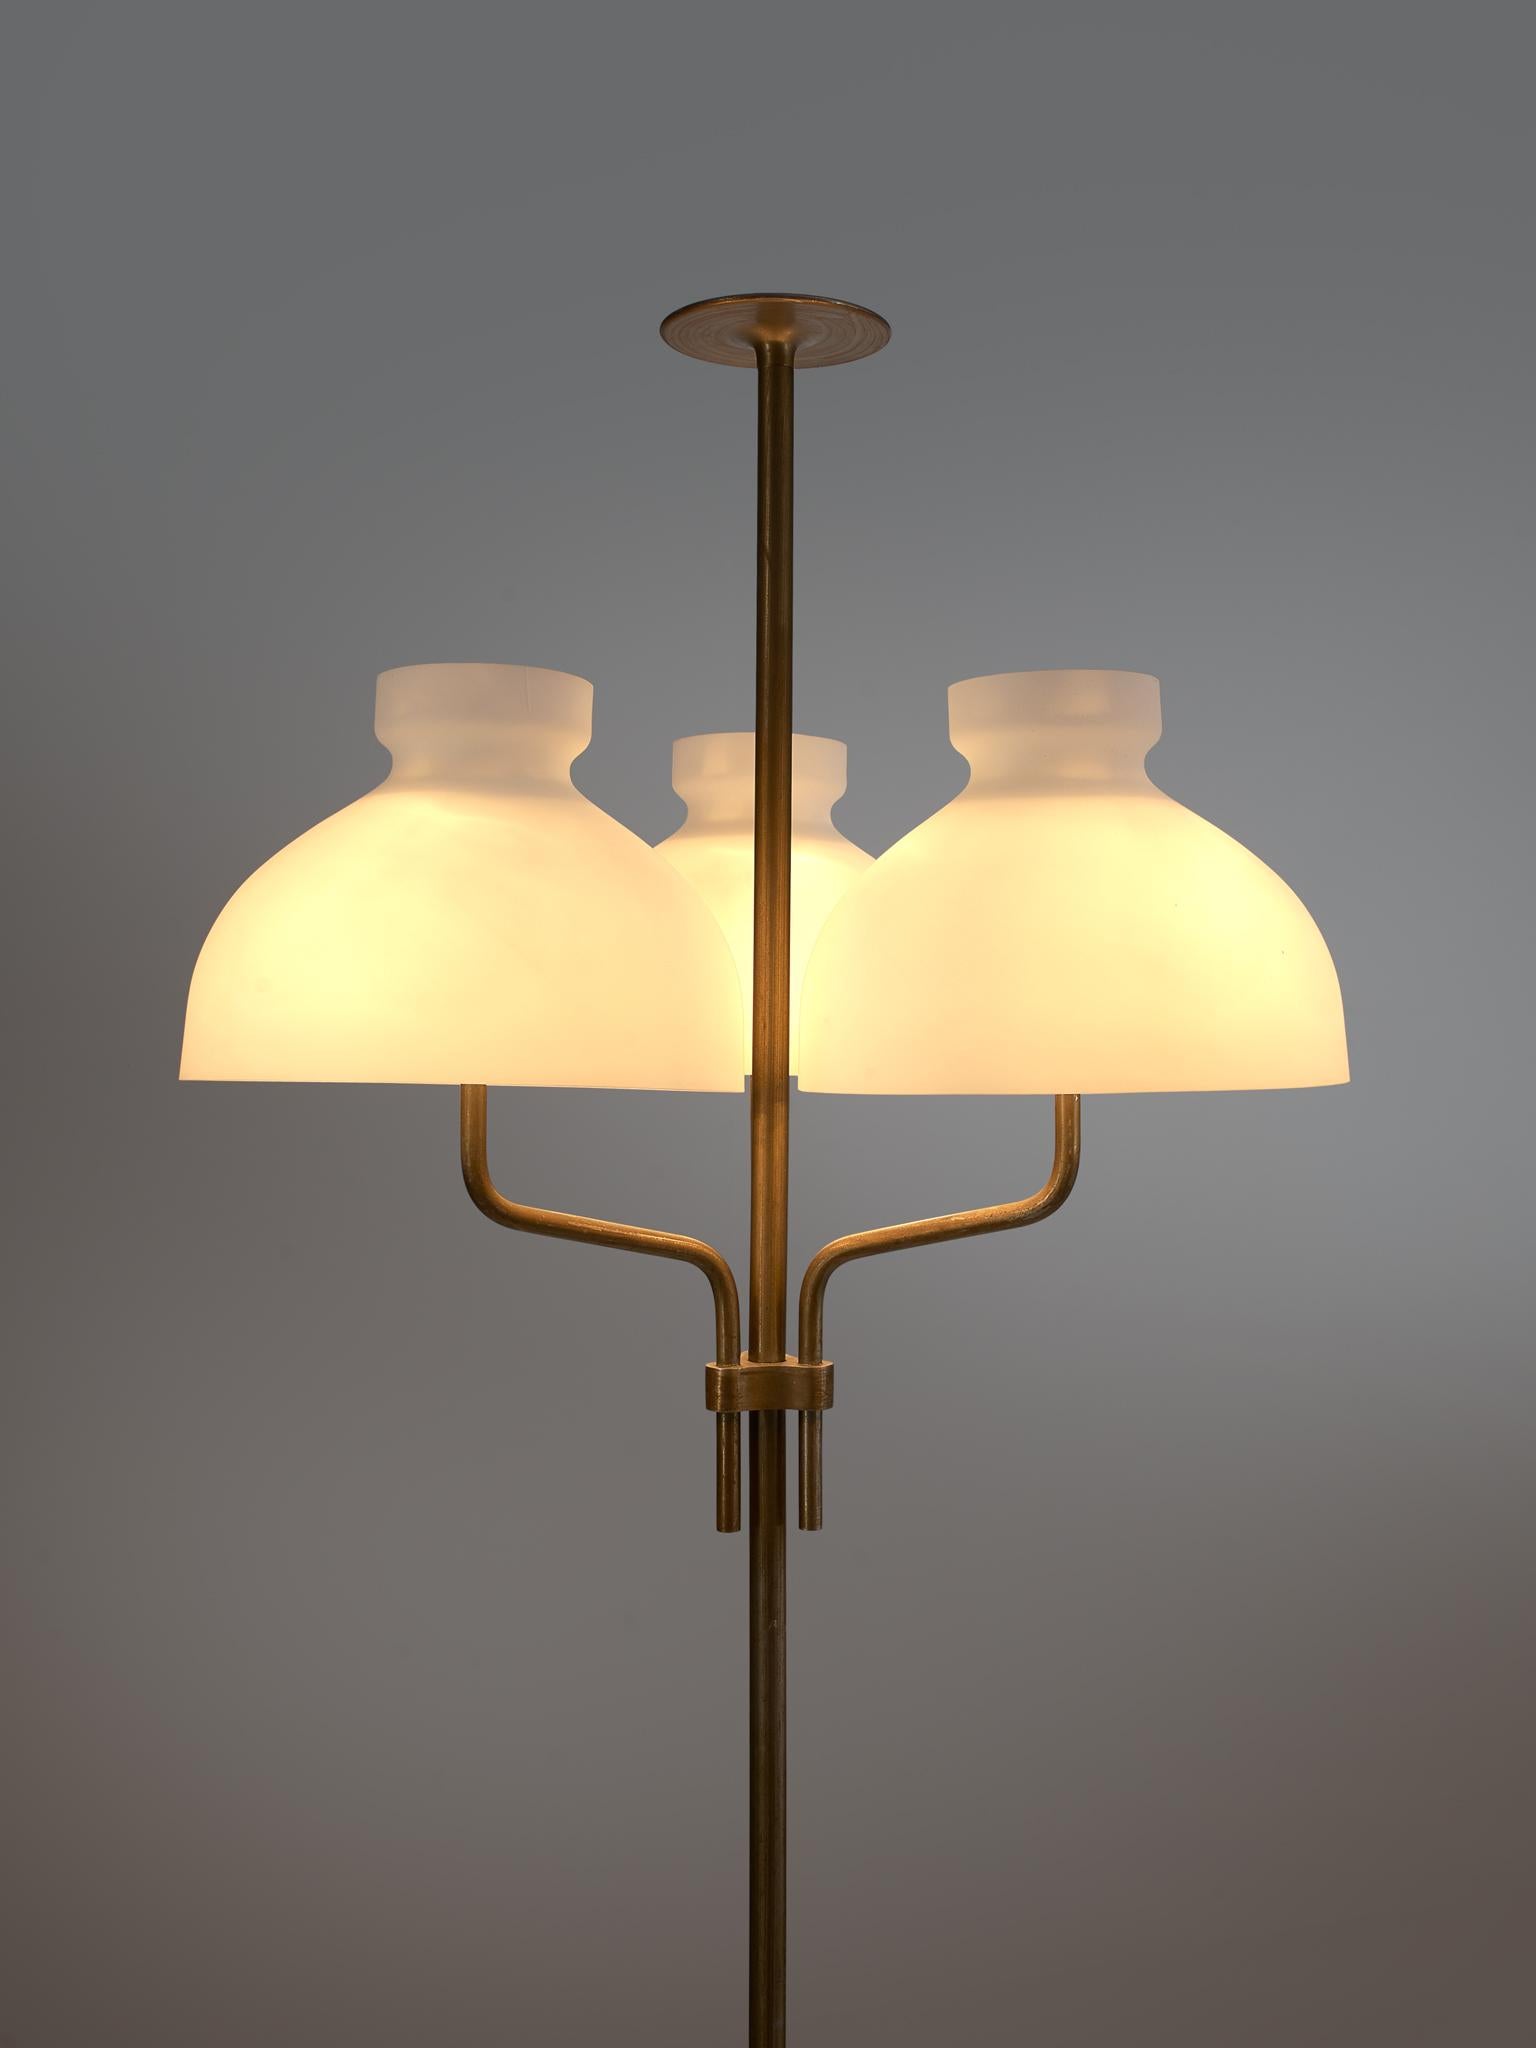 Ignazio Gardella 'Arenzano' Floor Lamp in Brass and Opaline Glass 1